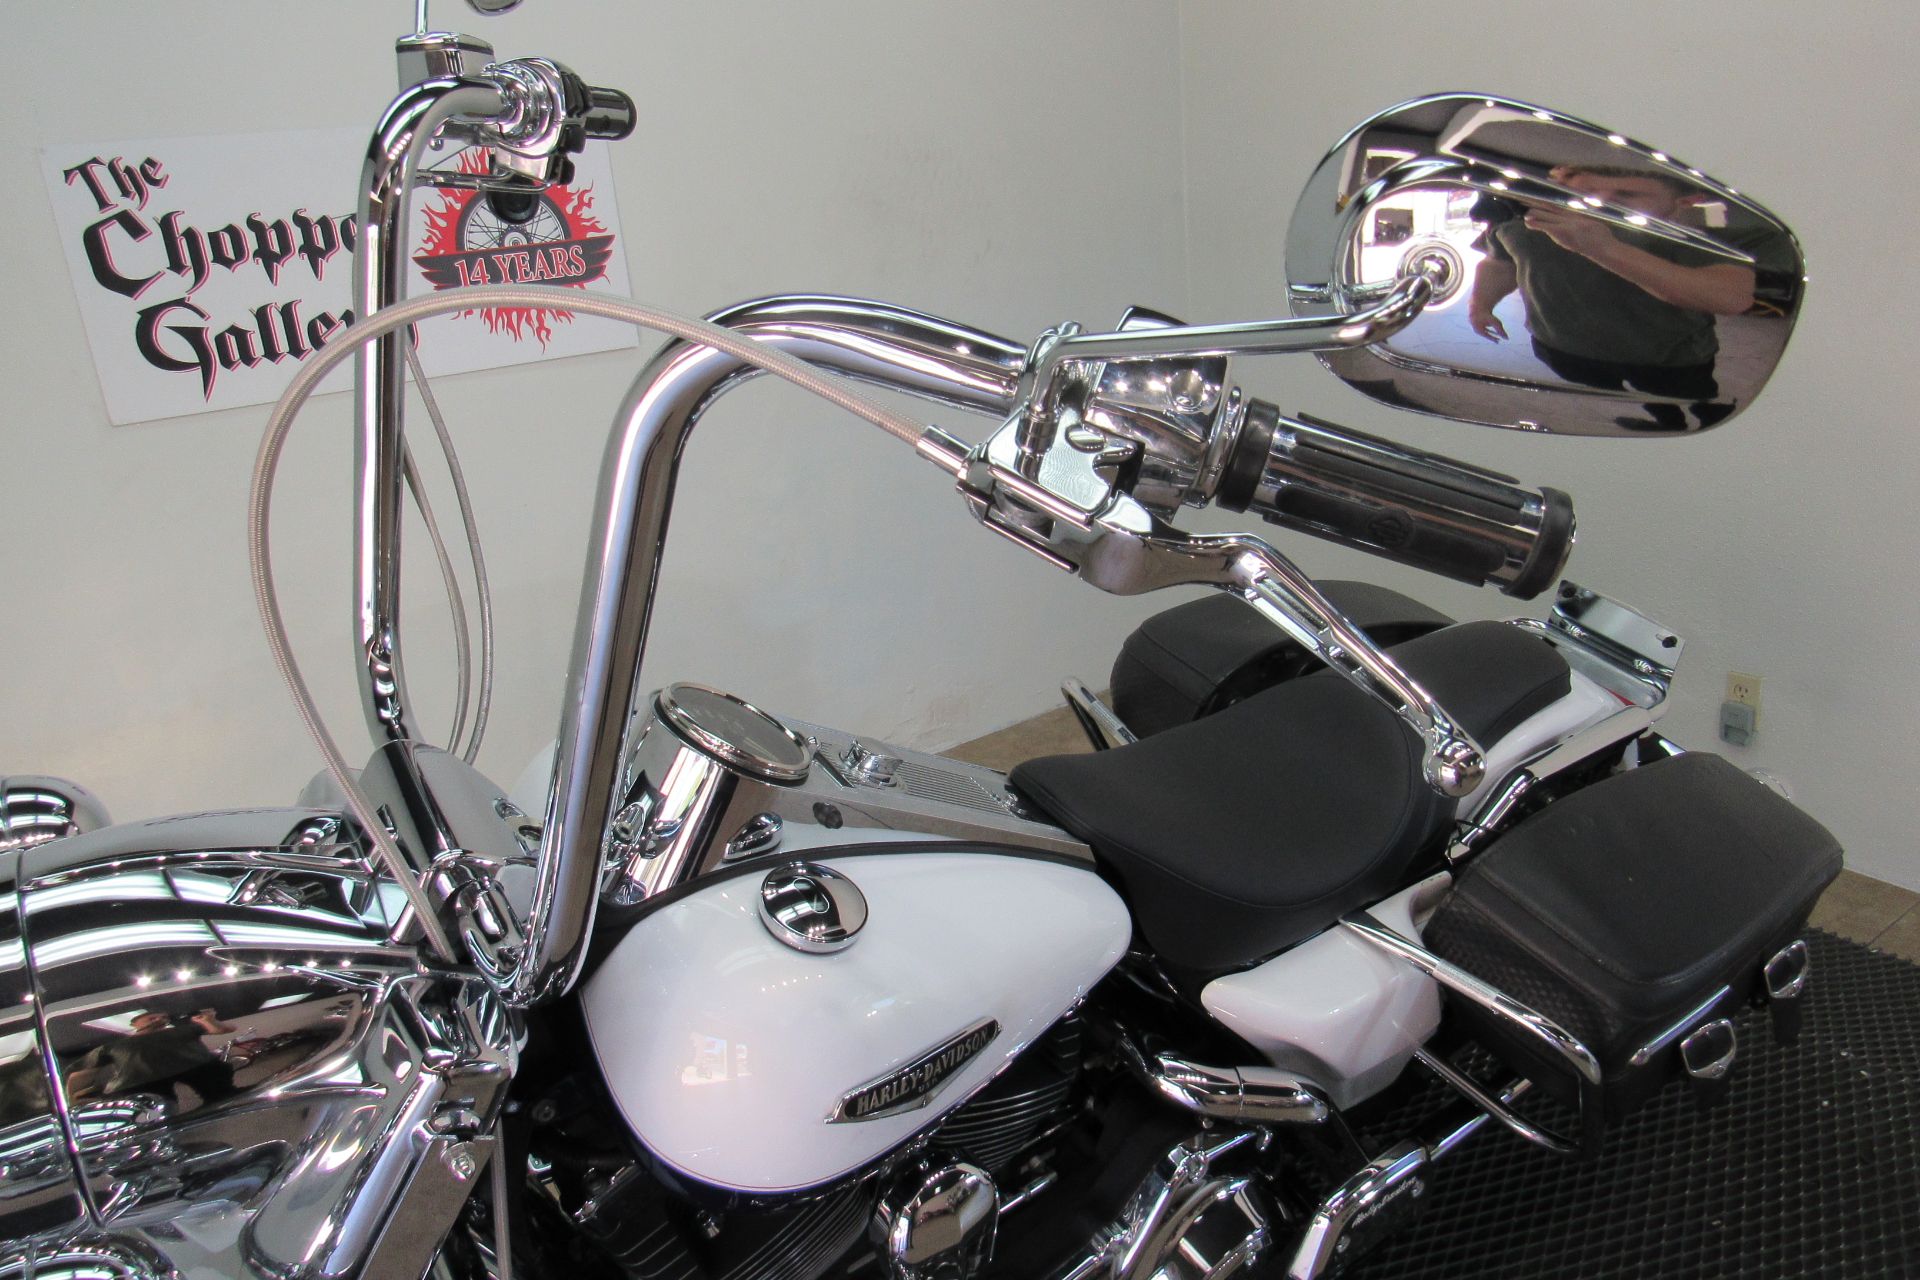 2007 Harley-Davidson Road King® Classic in Temecula, California - Photo 29